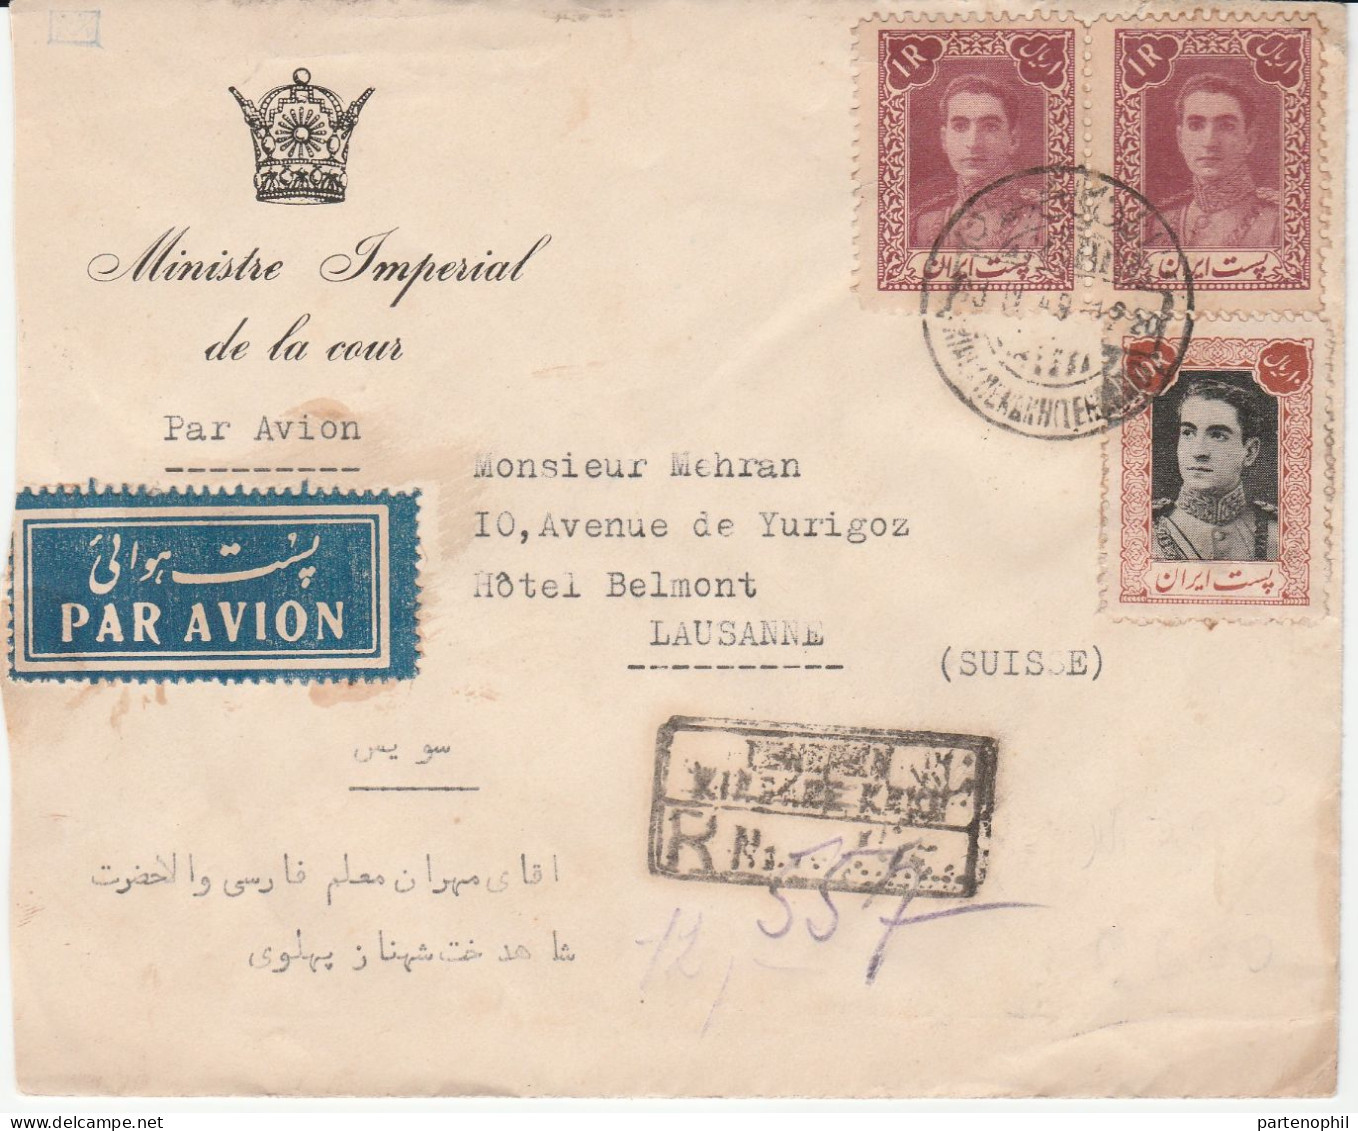 Iran - Postal History - Postgeschichte - Storia Postale - Histoire Postale - Iran